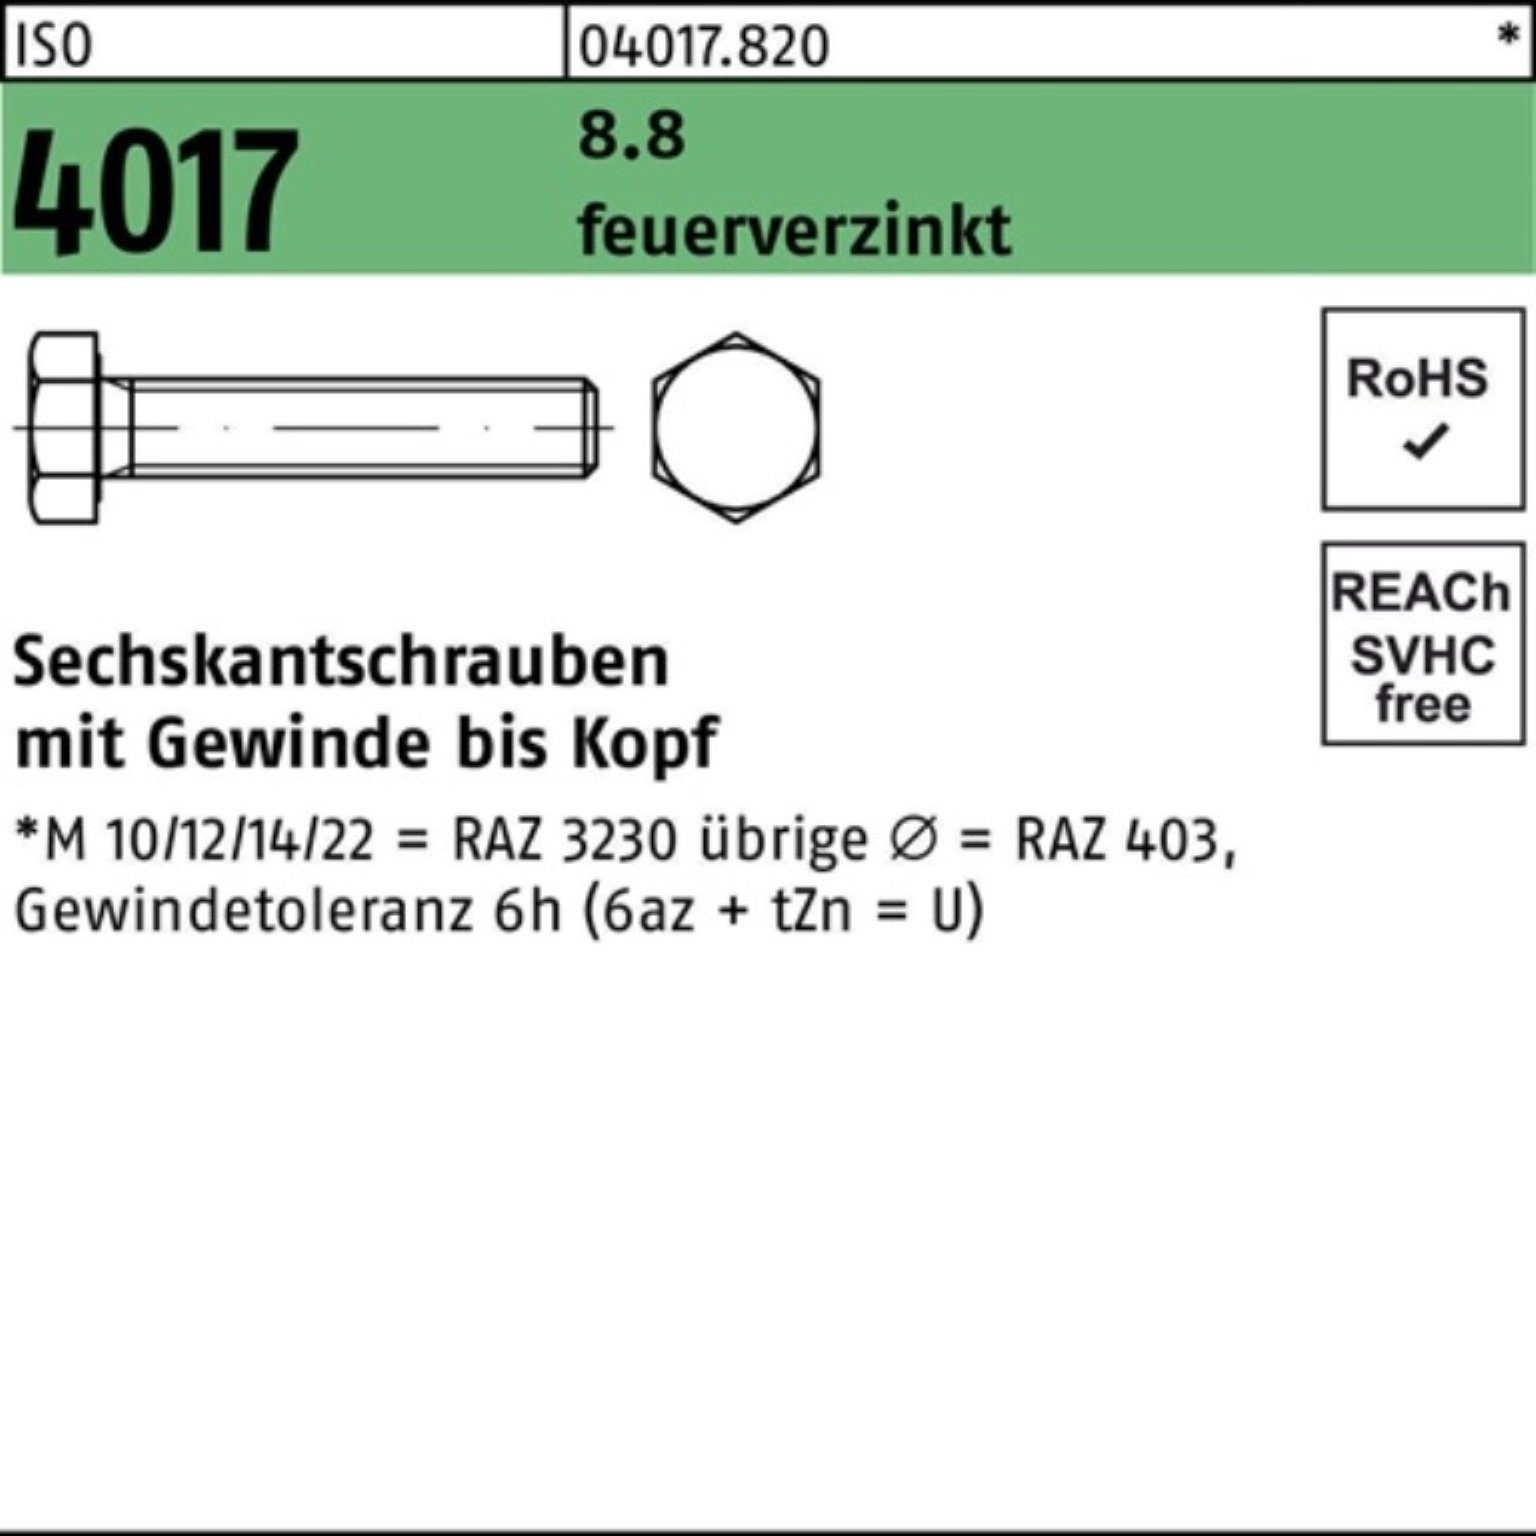 Bufab Sechskantschraube 100er Pack feuerverz. Stü 70 1 8.8 4017 VG M30x Sechskantschraube ISO